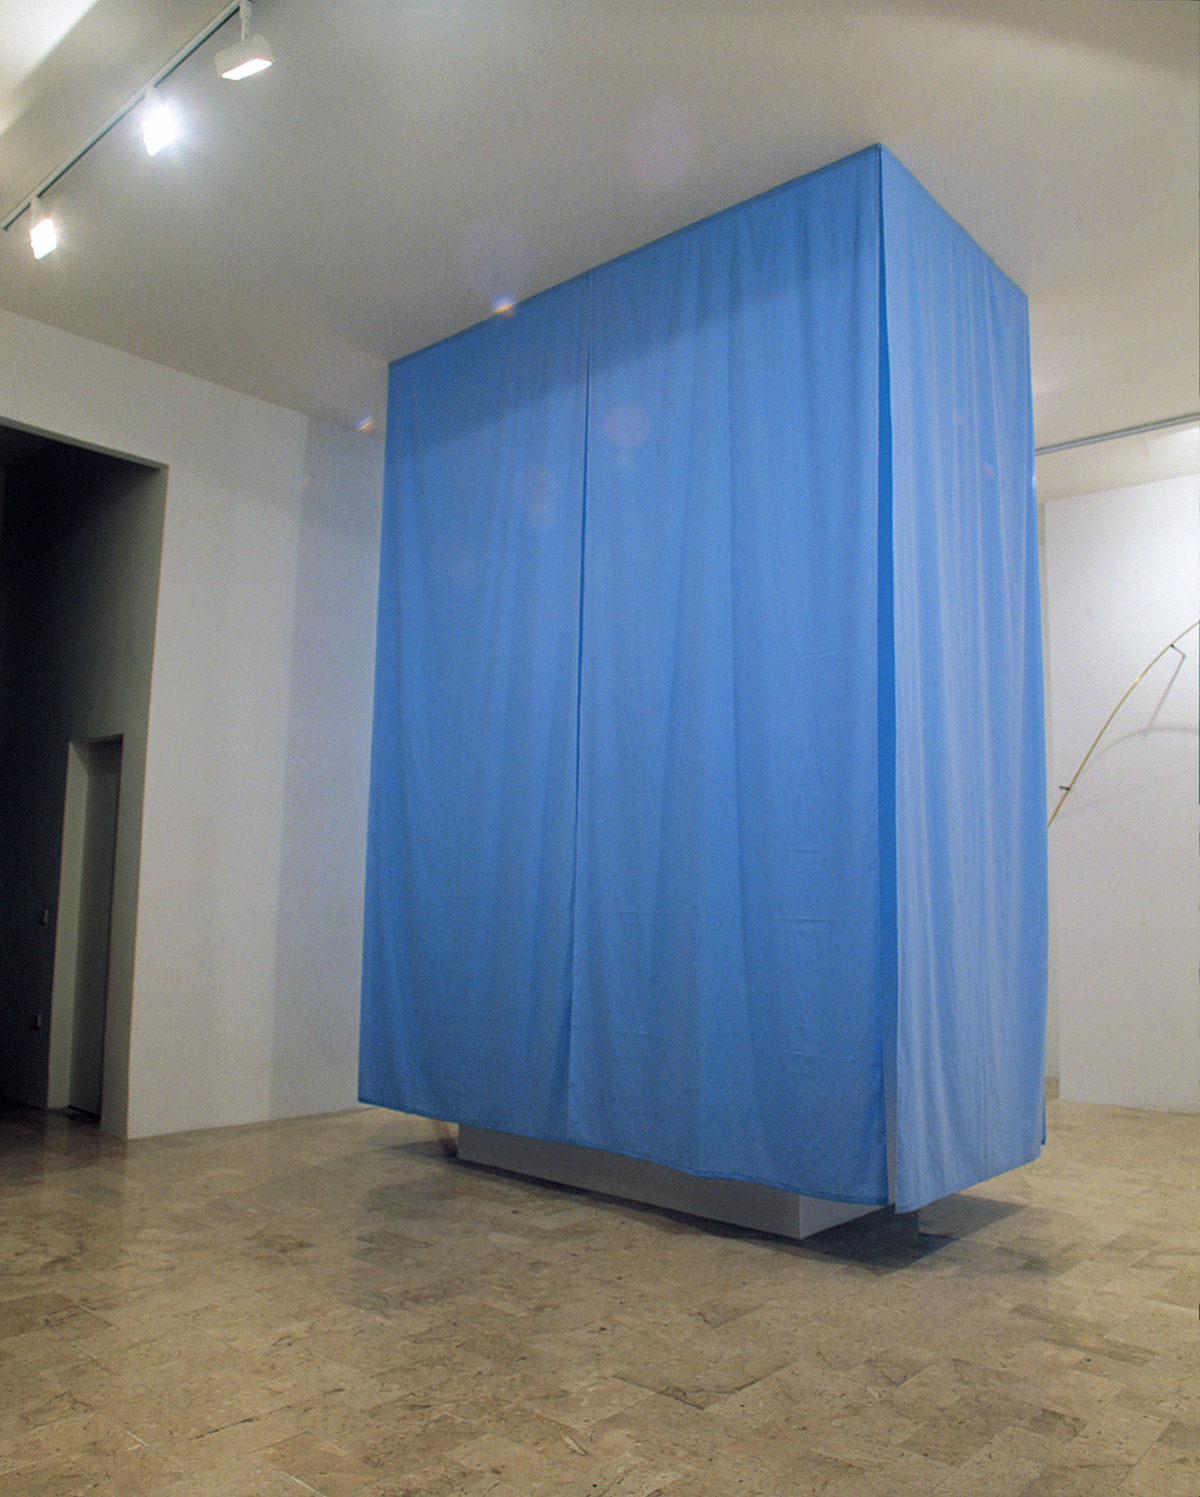 Satoshi Hirose, Paese della luce “Napoli”, 2002, cloth, aluminum, cm 385x293x148